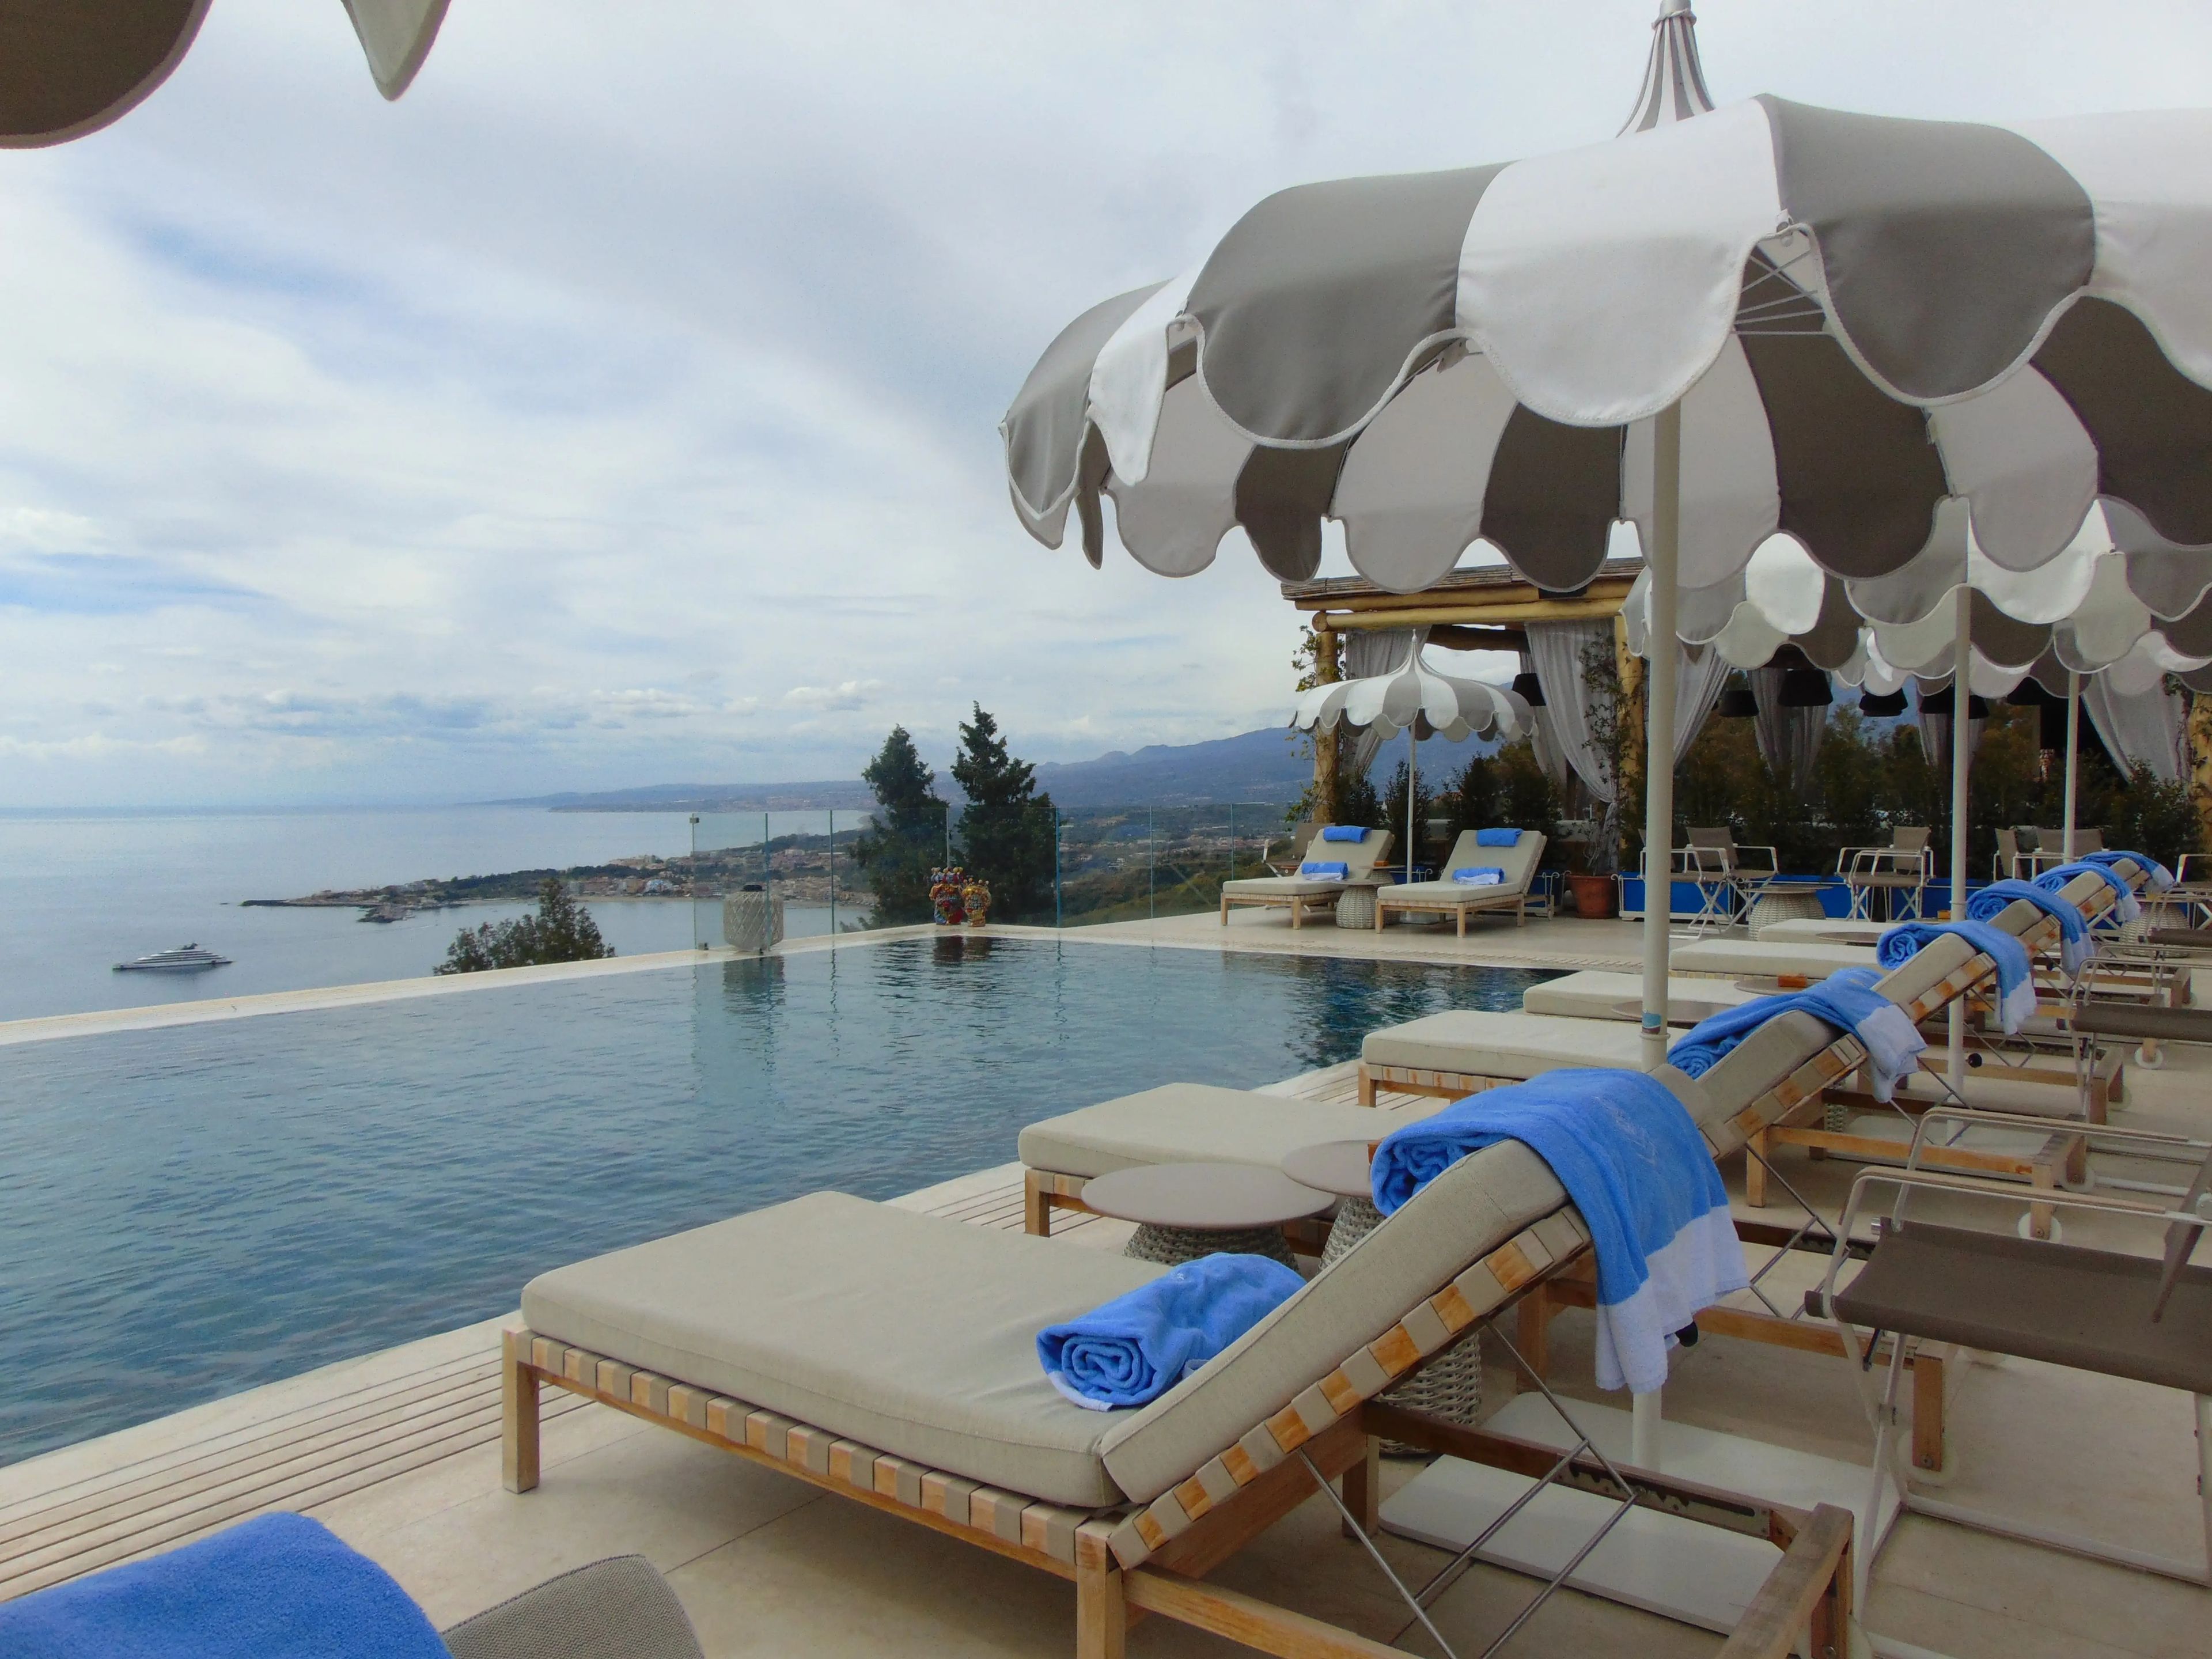 La zona de la piscina del hotel 'The White Lotus' de Taormina.